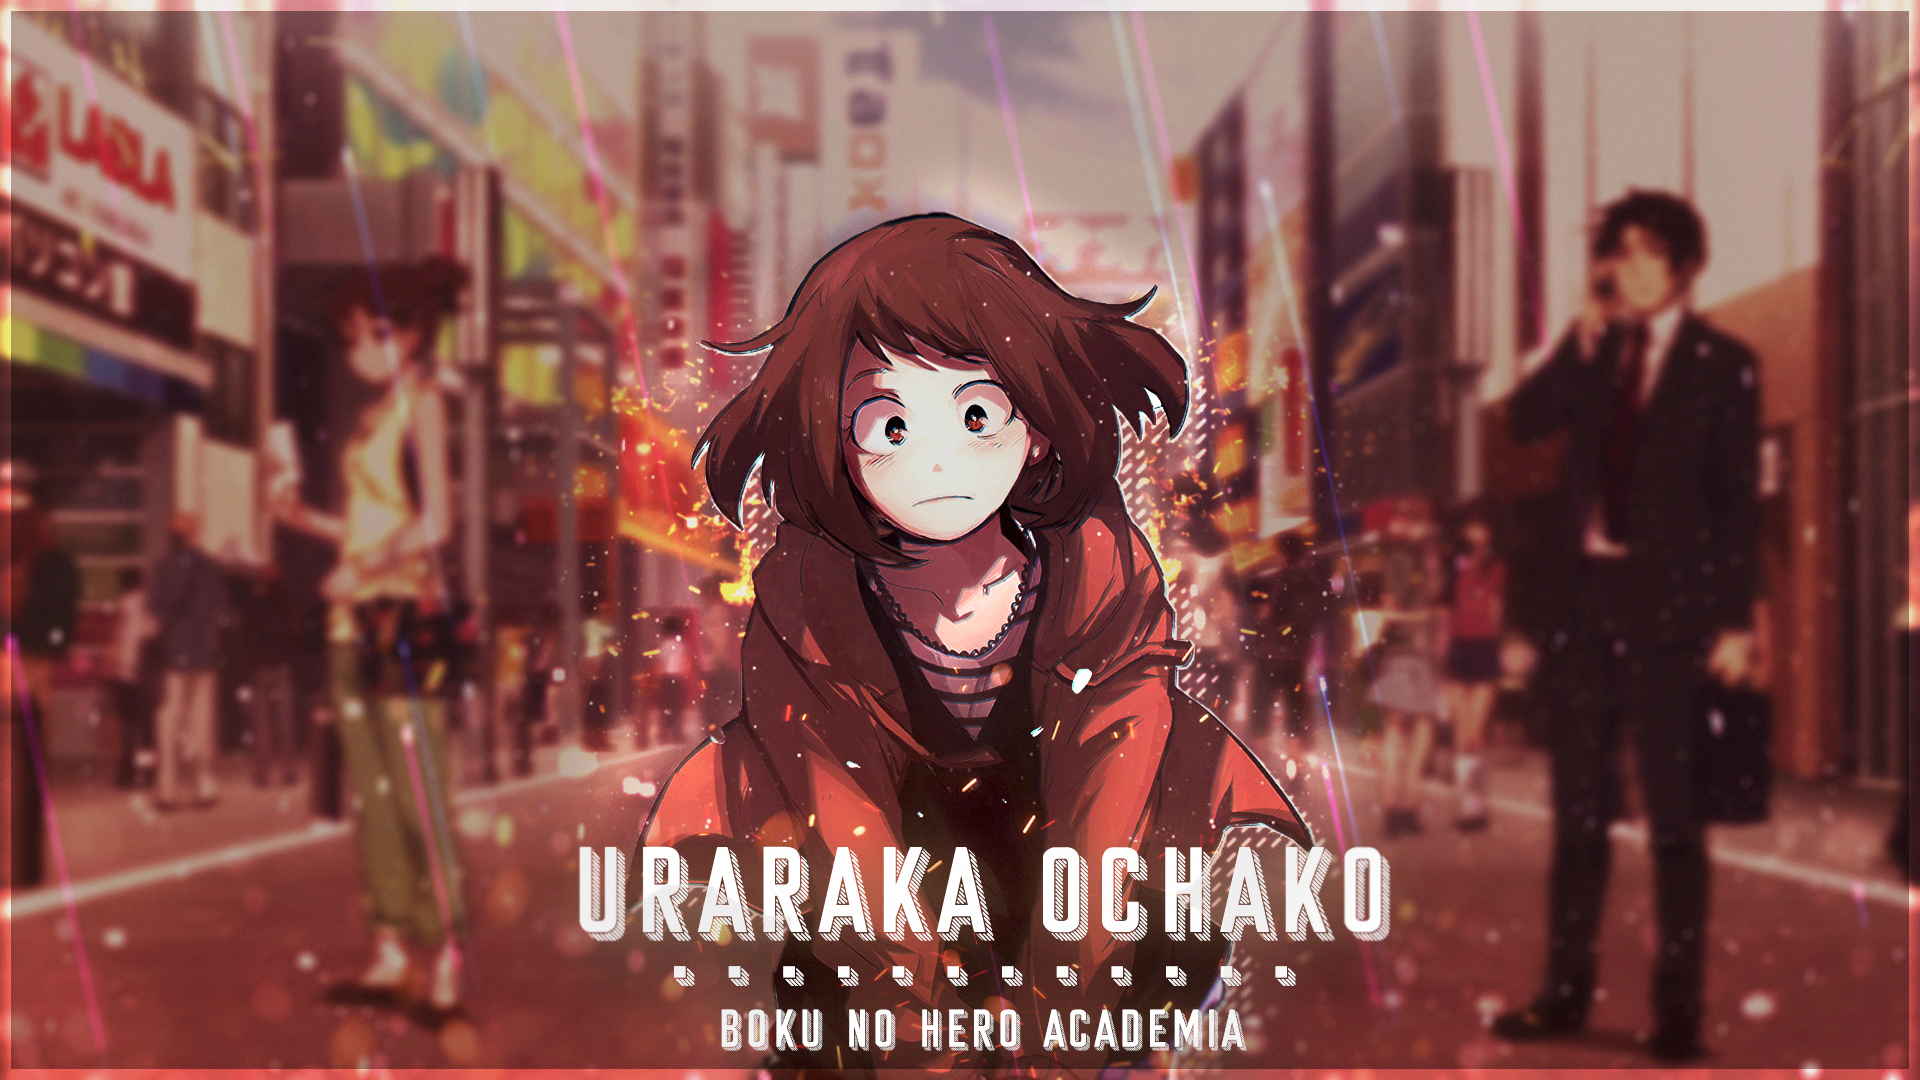 Uraraka Ochako In The City by CallMeShi